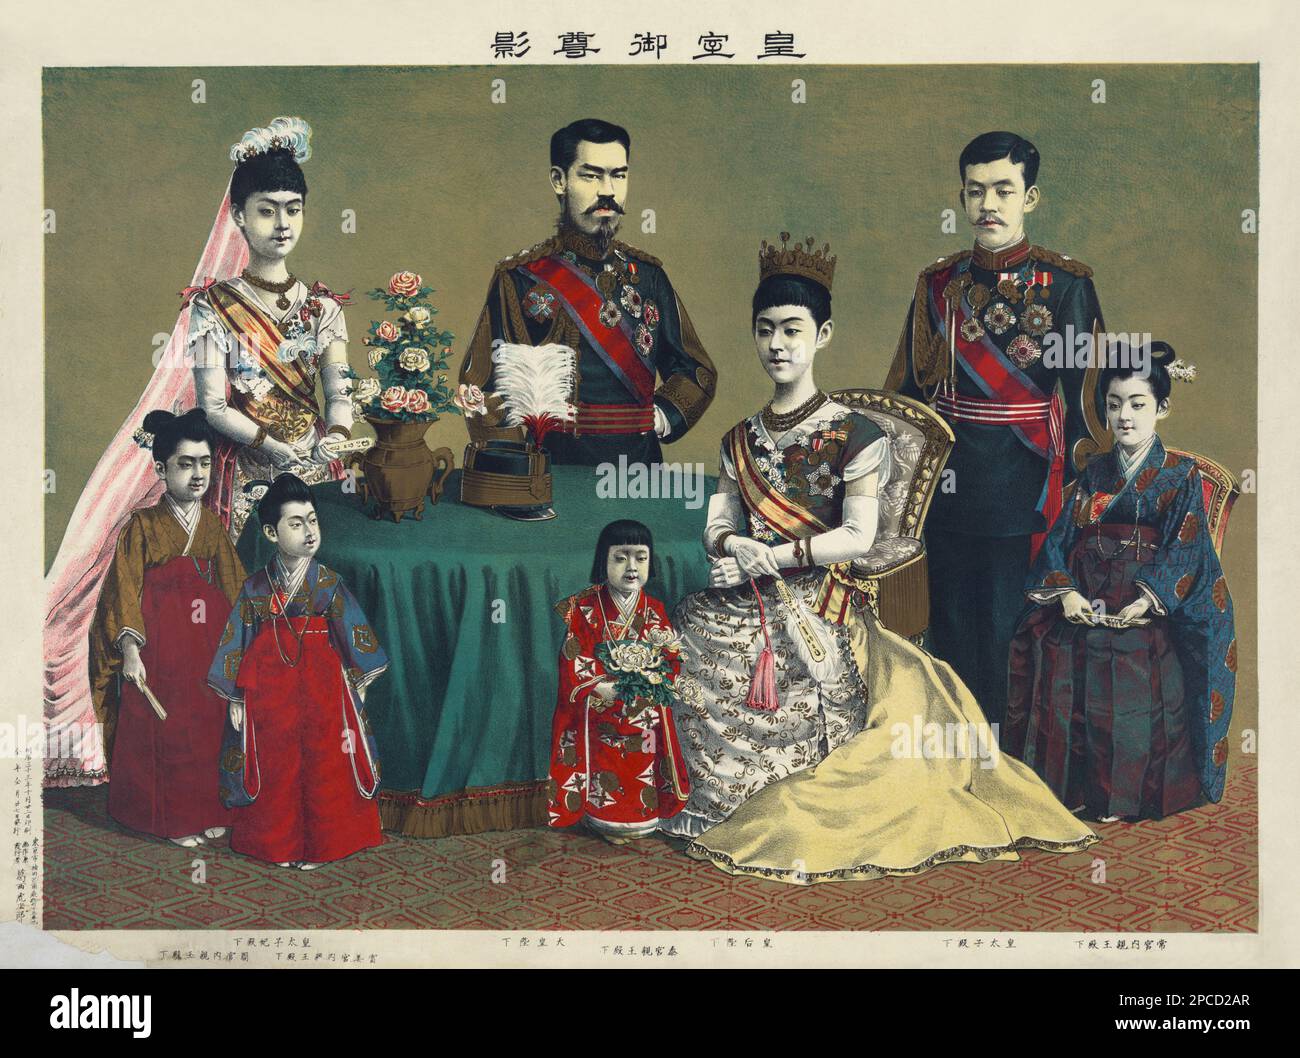 1900 , Tokyo , Japan : The Japanese imperial family . Wedding of Crown Prince Yoshihito and Princess Kujo Sadako . Print shows the Crown Prince and the Princess during their wedding ceremony;  Meiji , Emperor of Japan ( 1852 - 1912 ), and other members of the imperial family are present. Print by artist Torajiro  Kasai .  -  Taisho Emperor of Japan ( 1879 - 1926 ) -  GIAPPONE - NOBILITY - NOBILI - Nobiltà - REALI GIAPPONESI - ROYALTY - IMPERATORE  - IMPERATRICE - principe - principessa - illustrazione - stampa - print - engraving - incisione - MATRIMONIO - CERIMONIA NUZIALE  - SPOSALIZIO - WIF Stock Photo